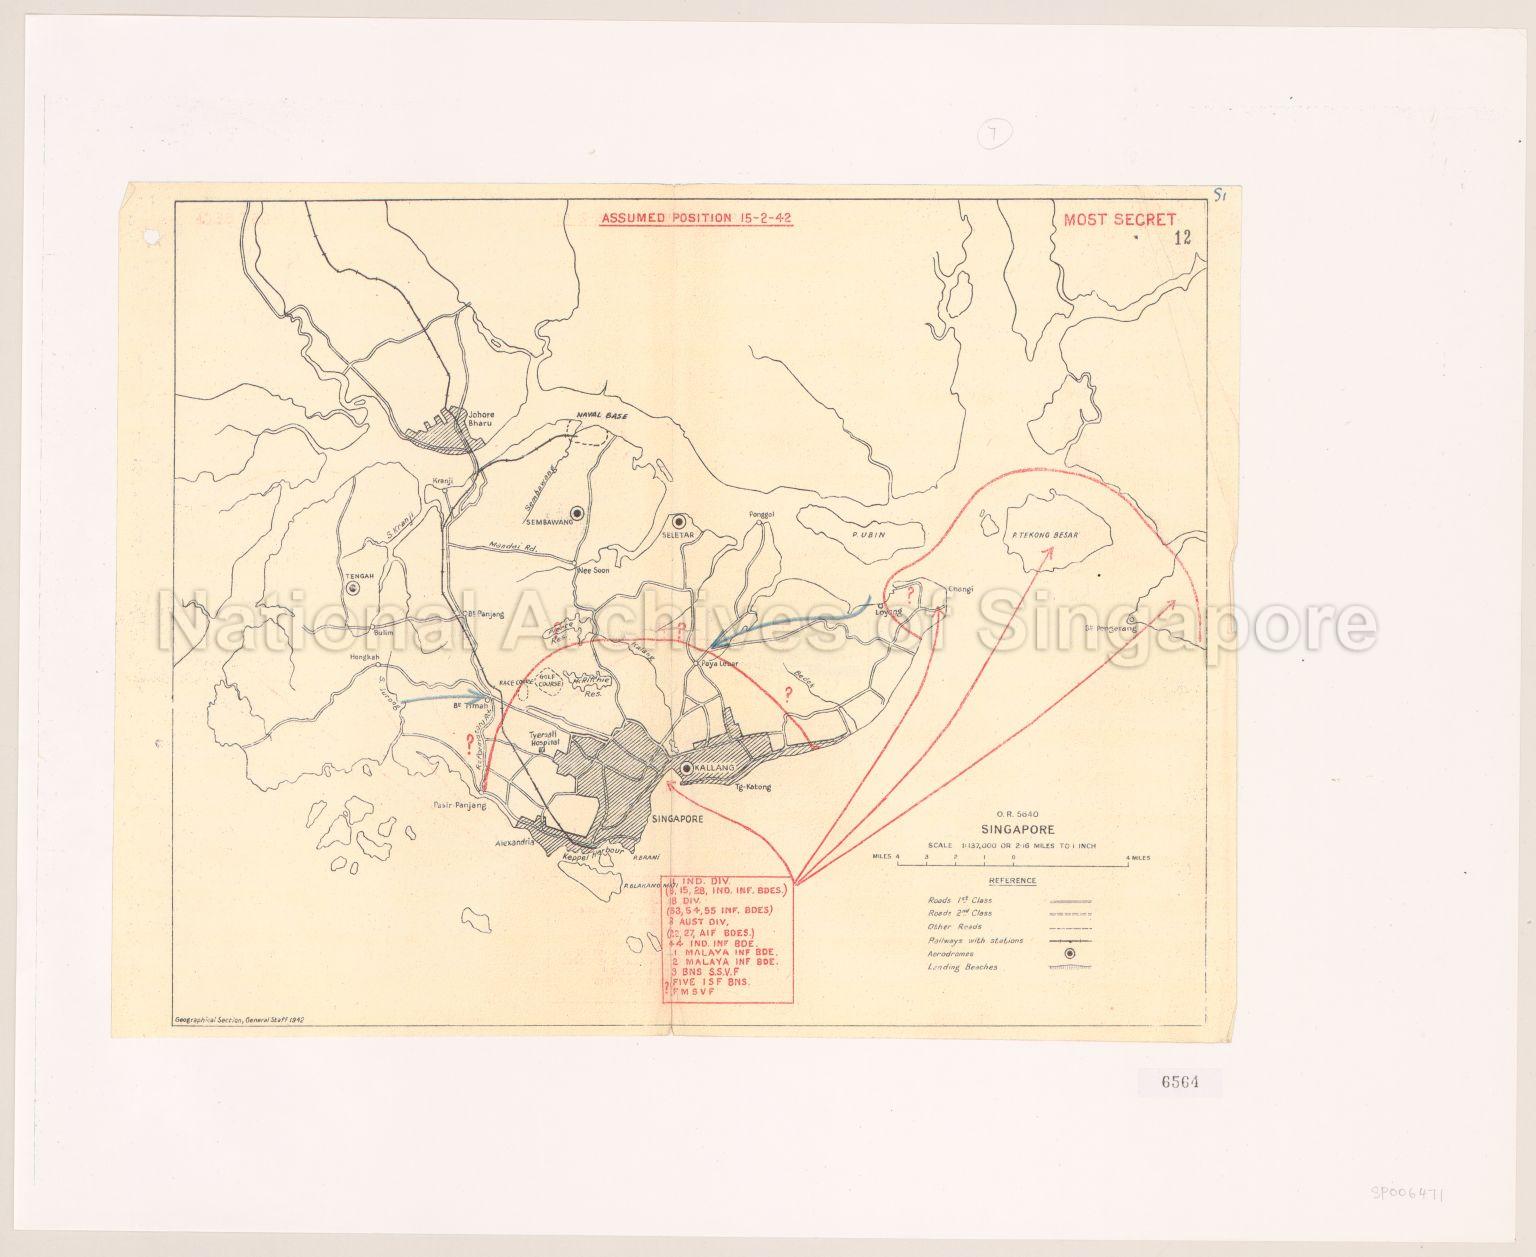 Singapore. Assumed Position 15 February 1942